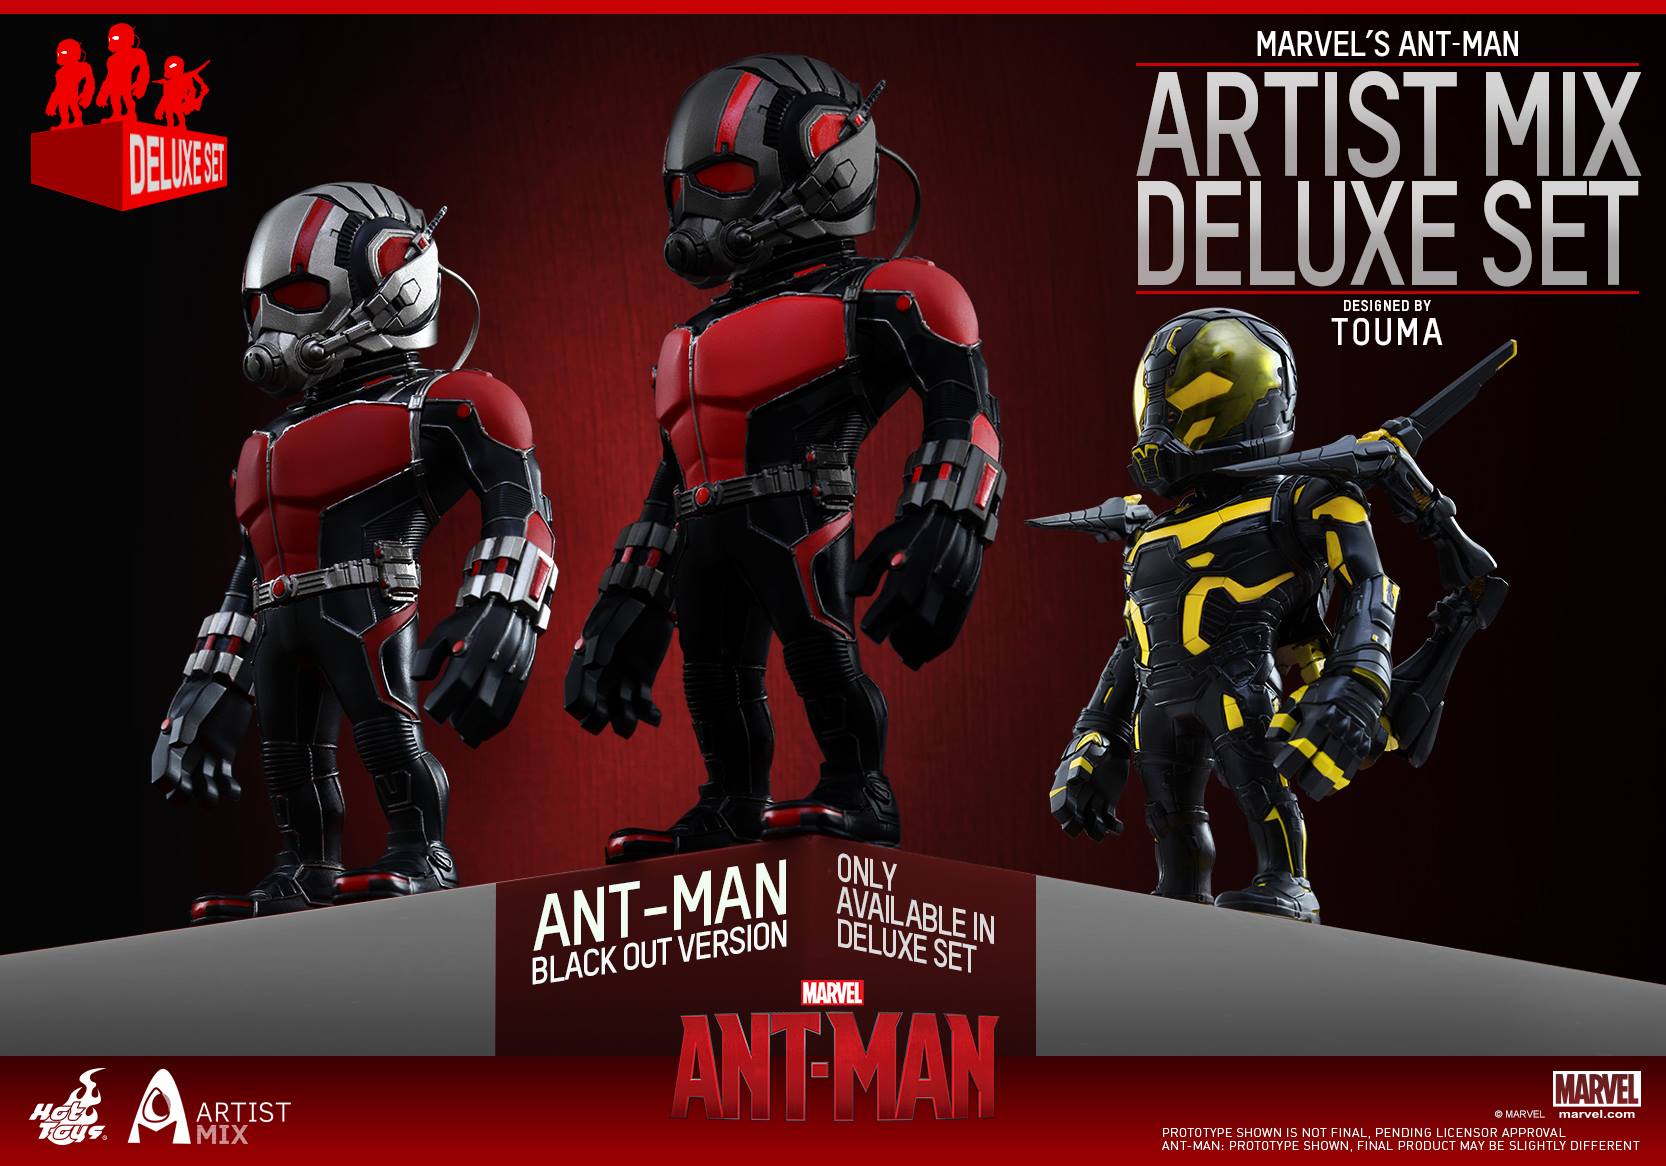 Ant-Man Artist Mix Figures Designed by TOUMA